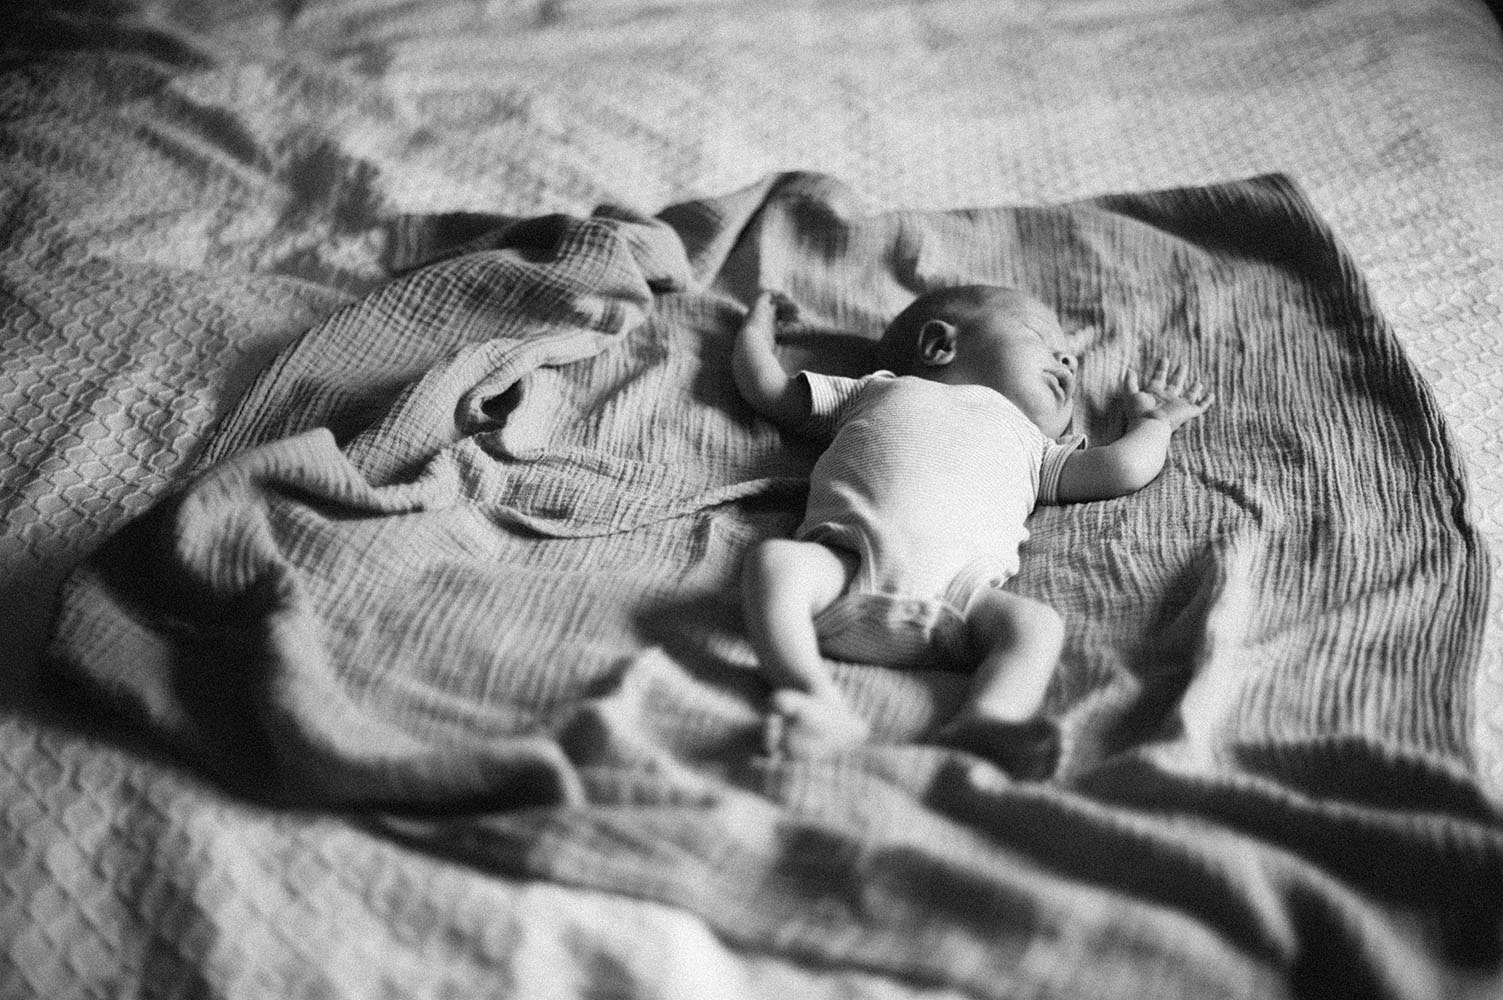 Newborn baby on bed